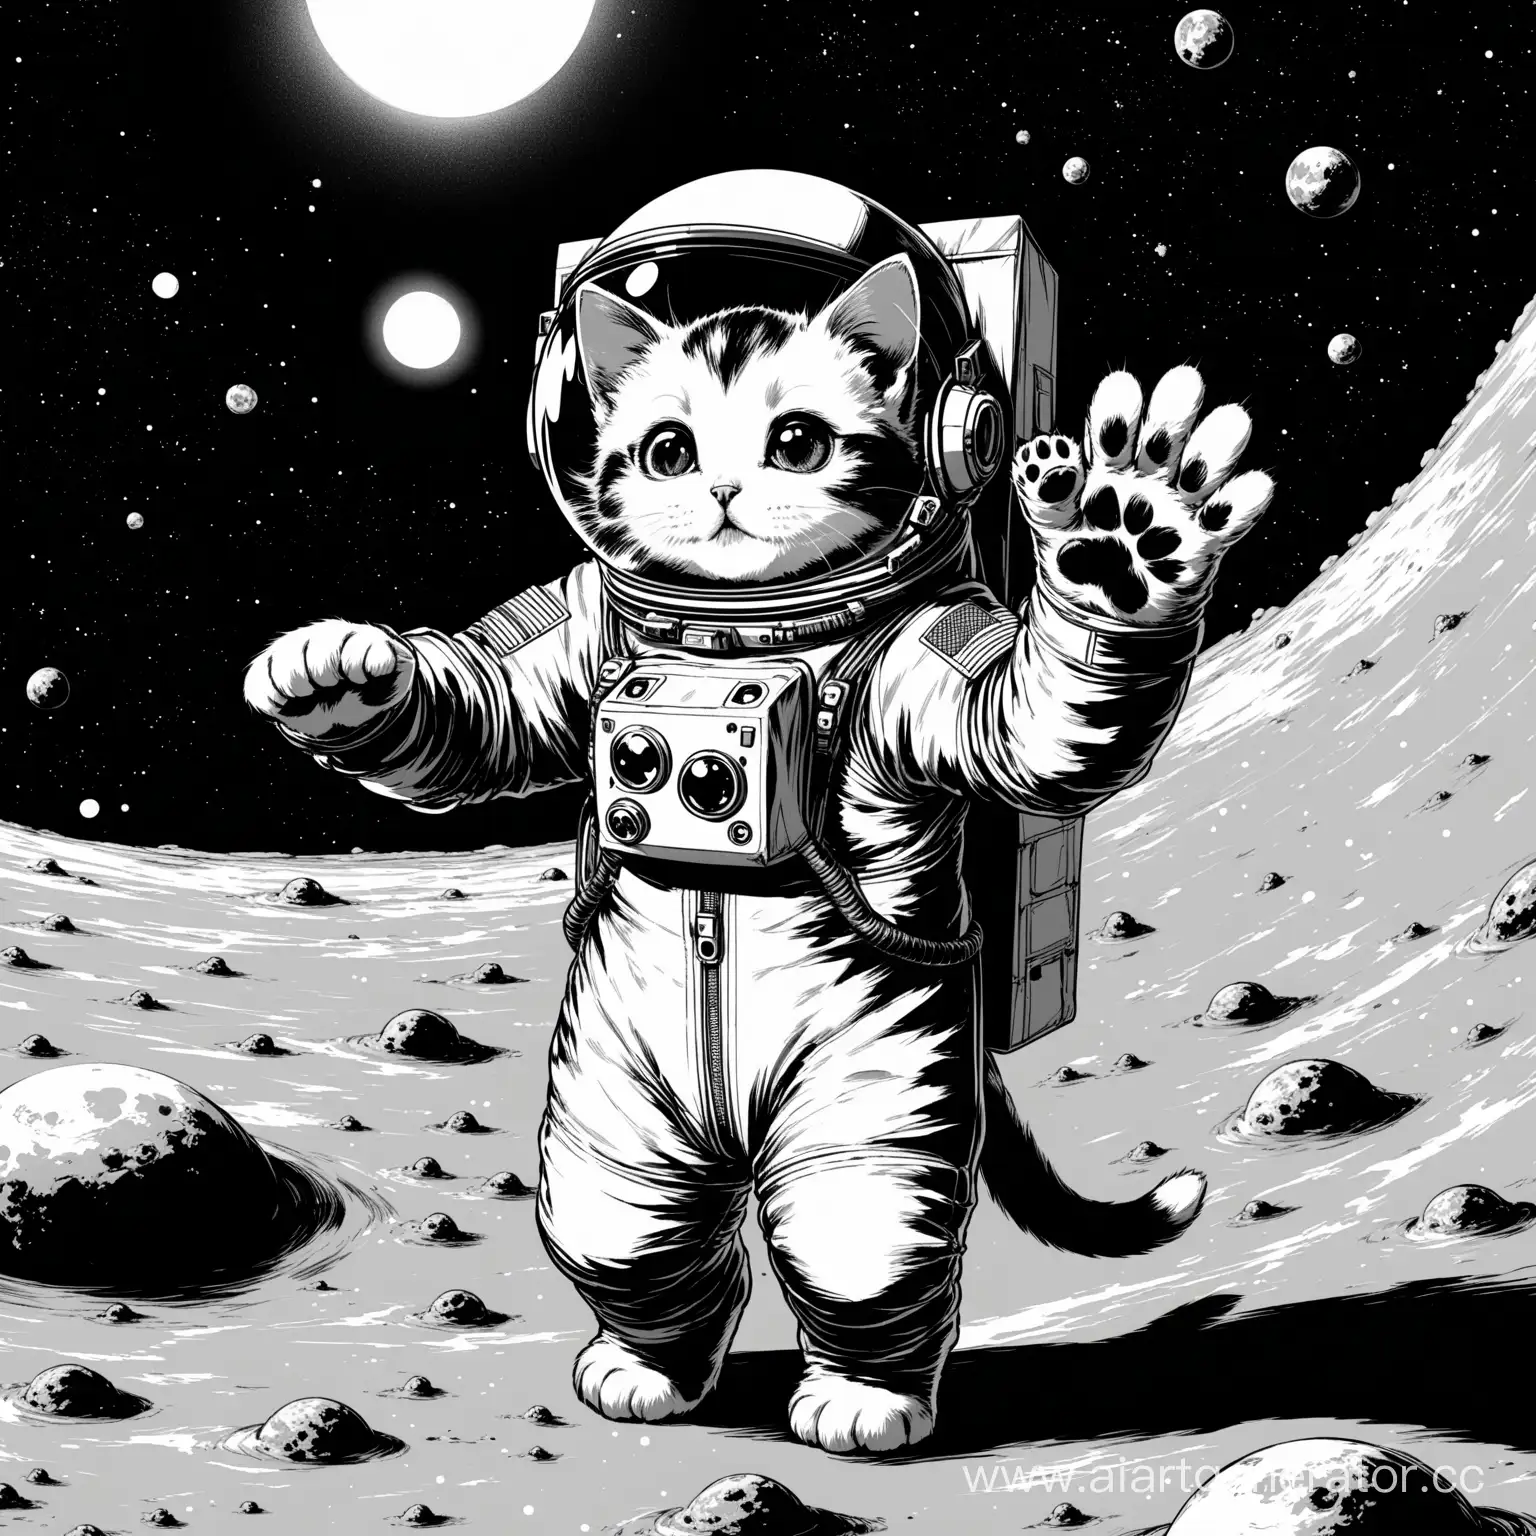 Adorable-Kitten-Astronaut-Waving-in-Monochrome-Spacesuit